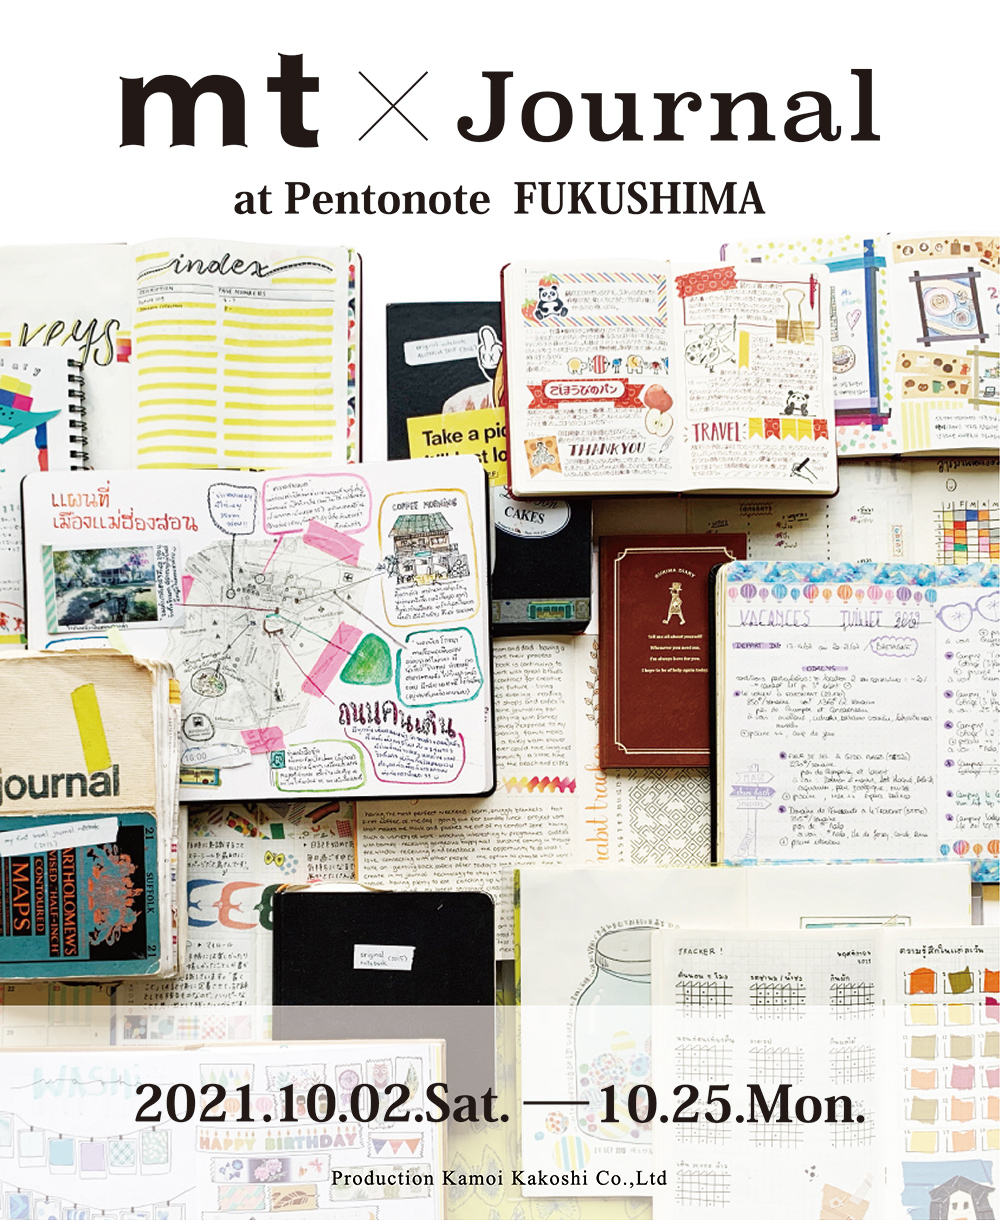 mt×Journal at Pentonote FUKUSHIMA 開催